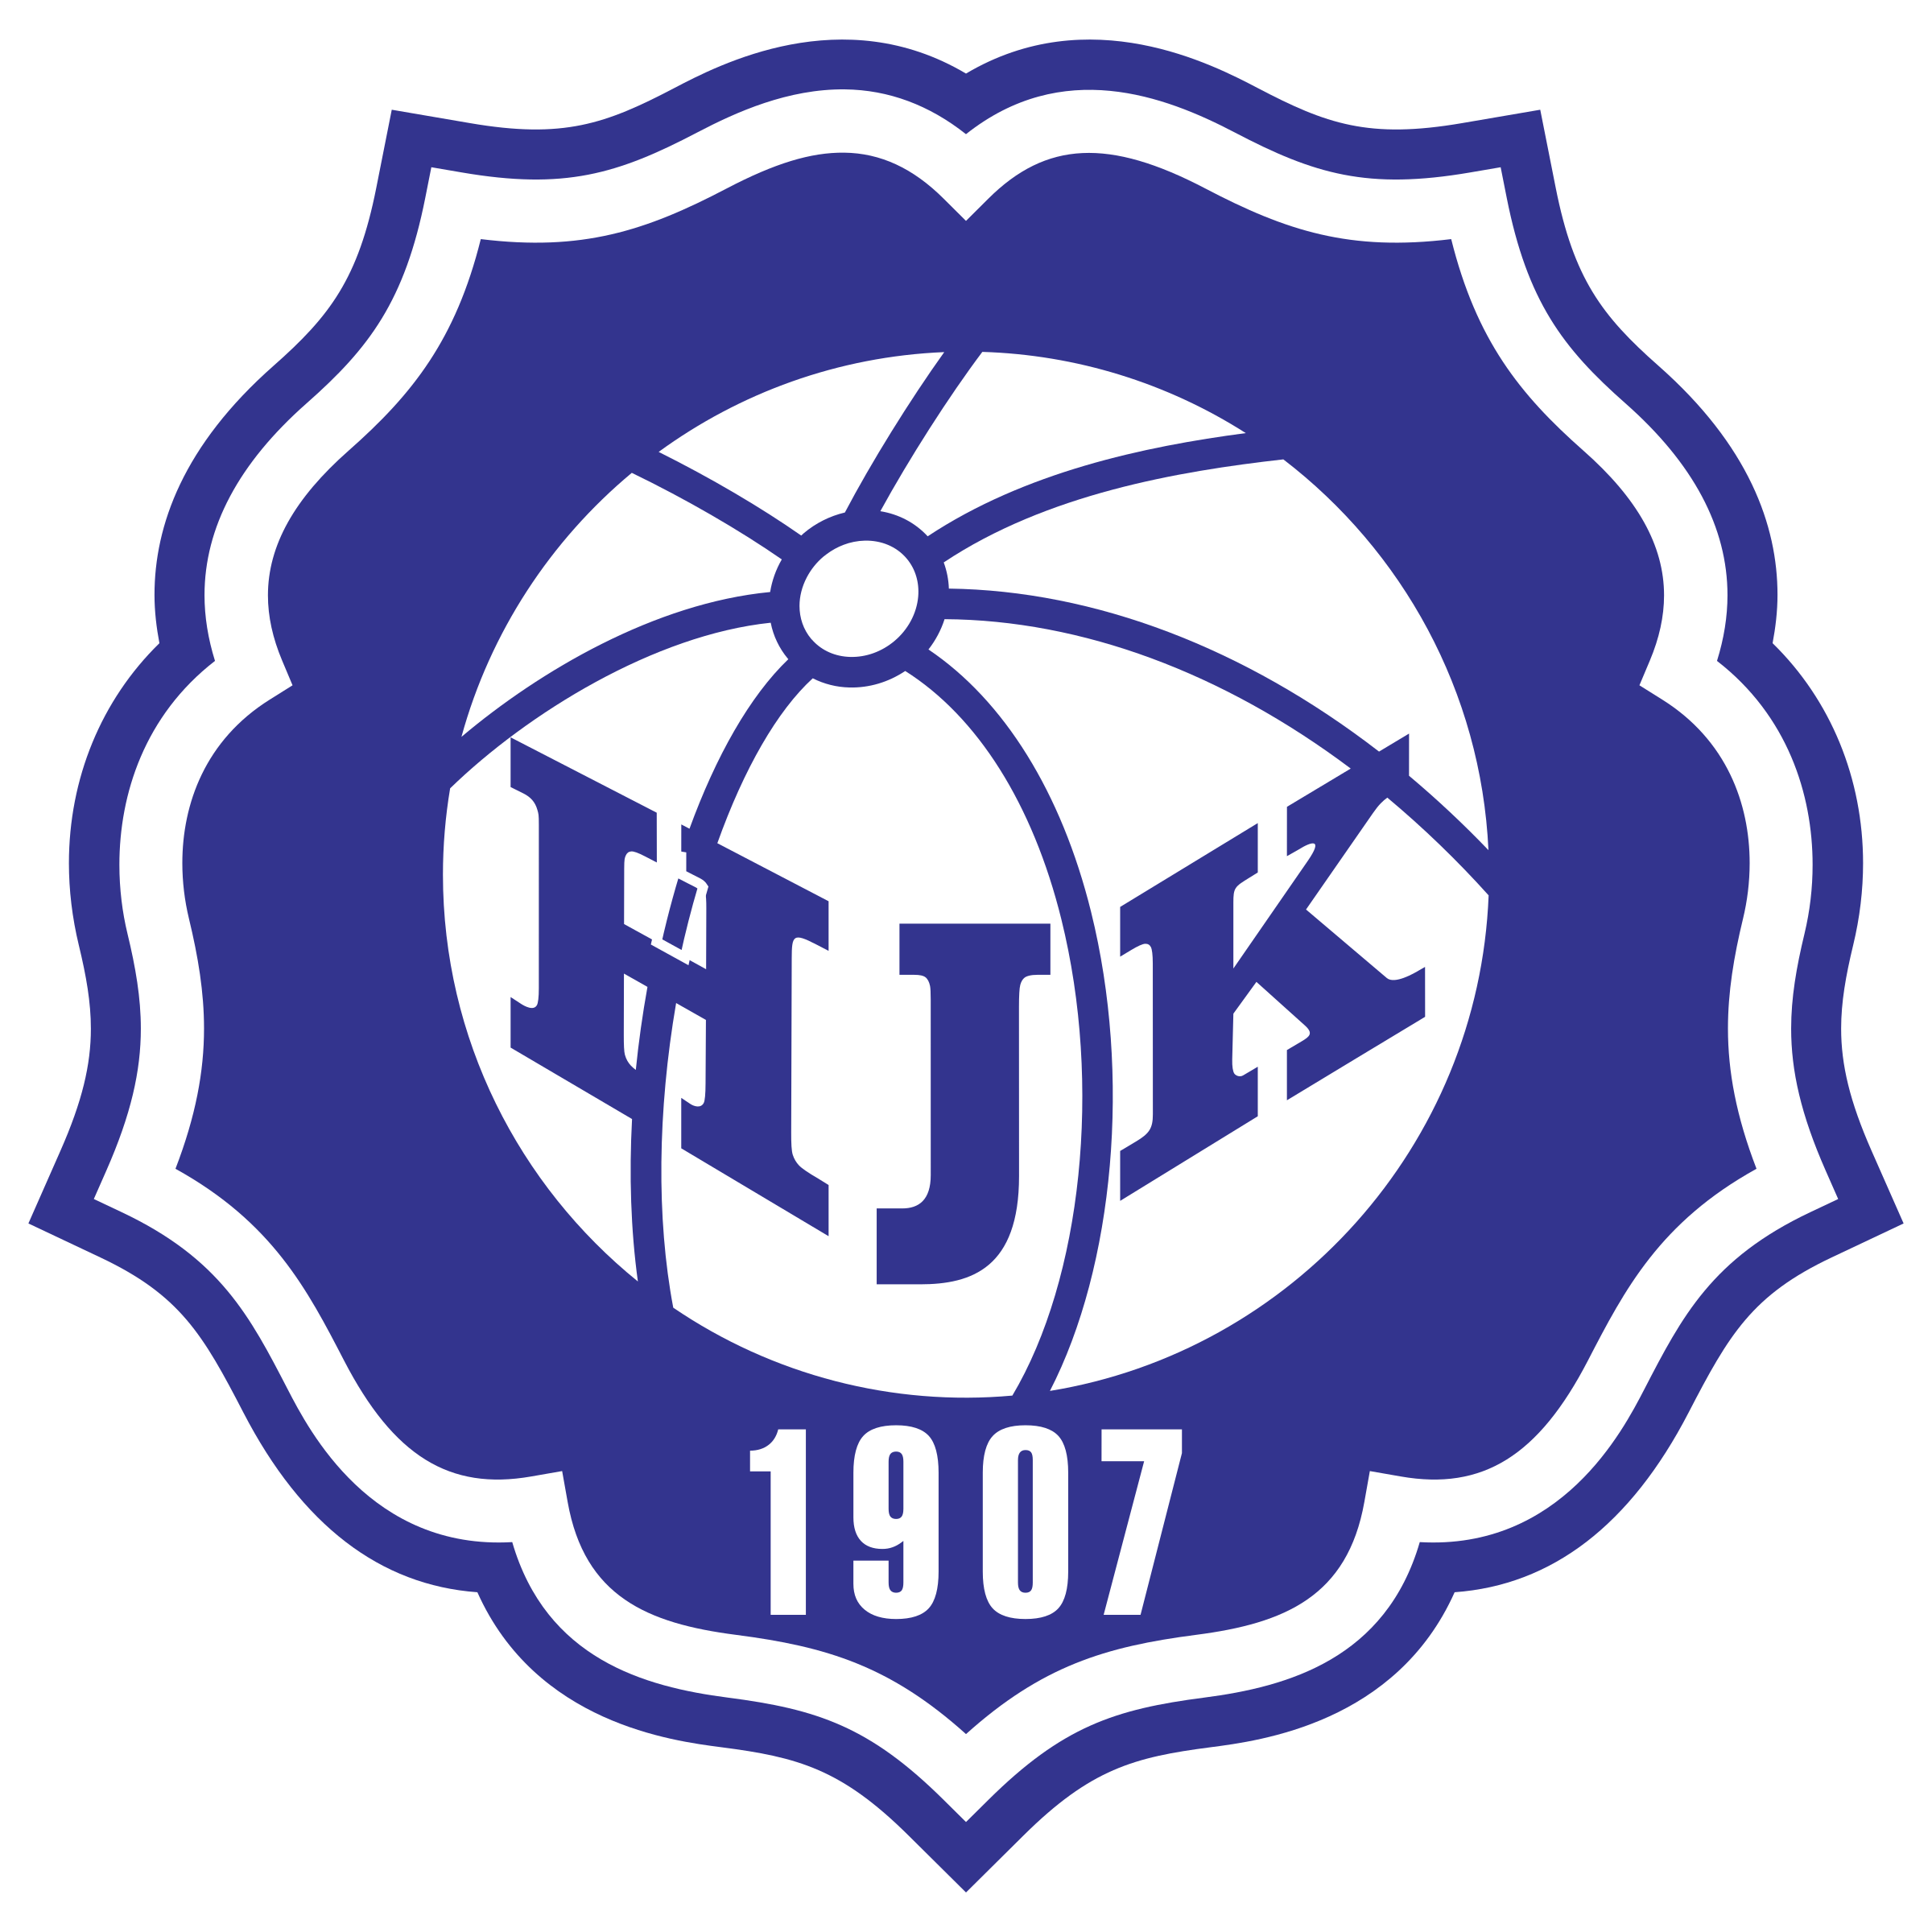 hjk-logo-png-transparent